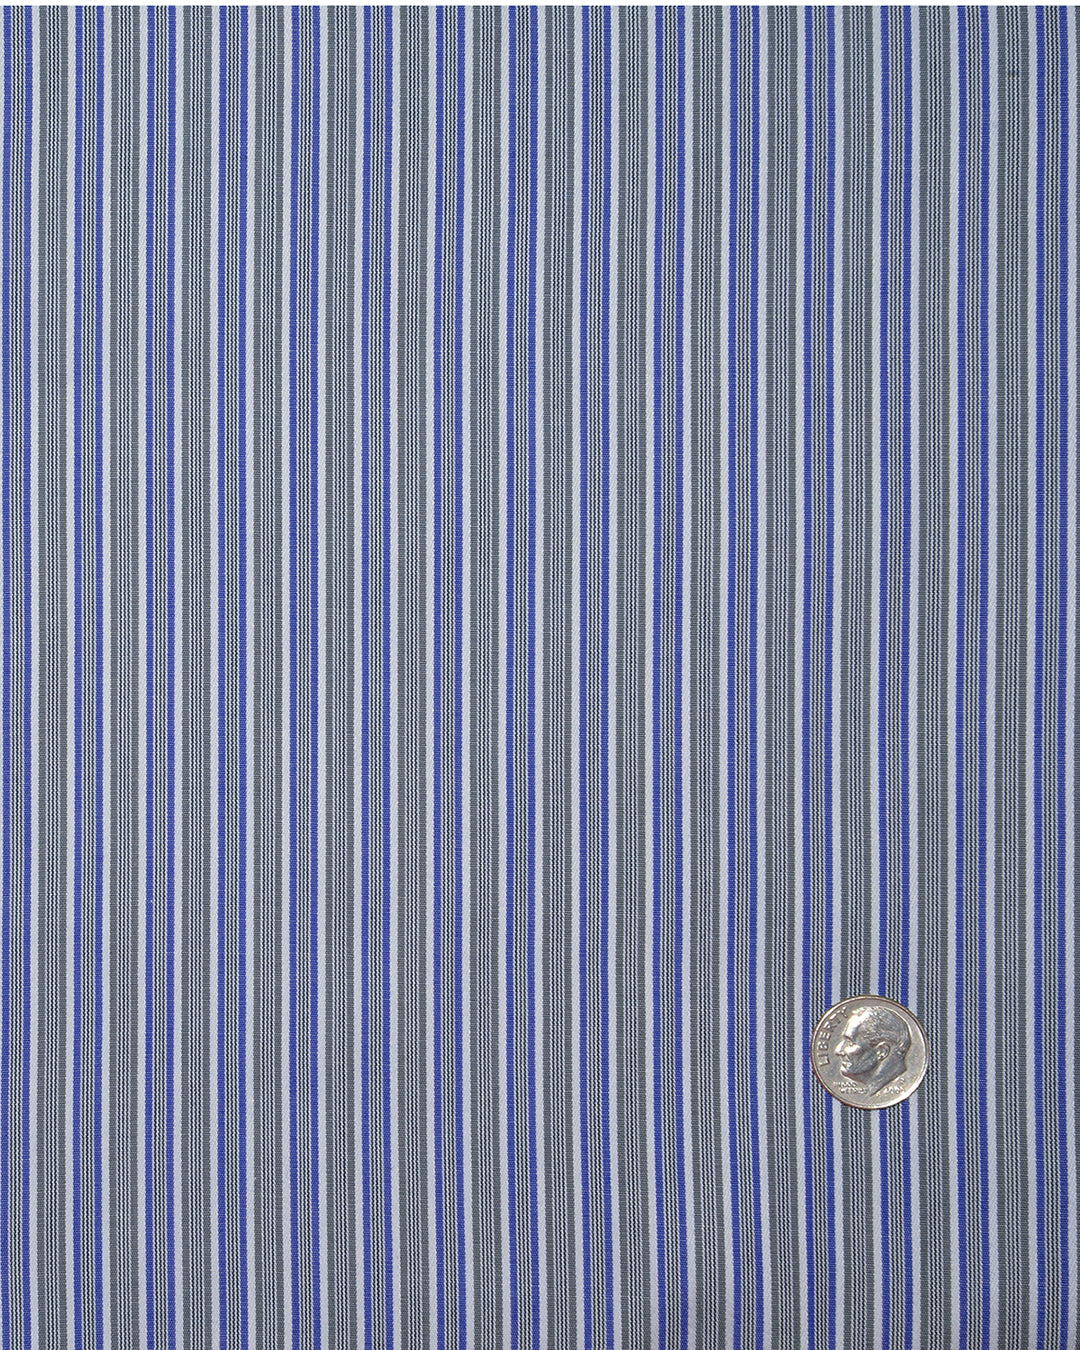 Grey White Blue & Black Alternate Stripes